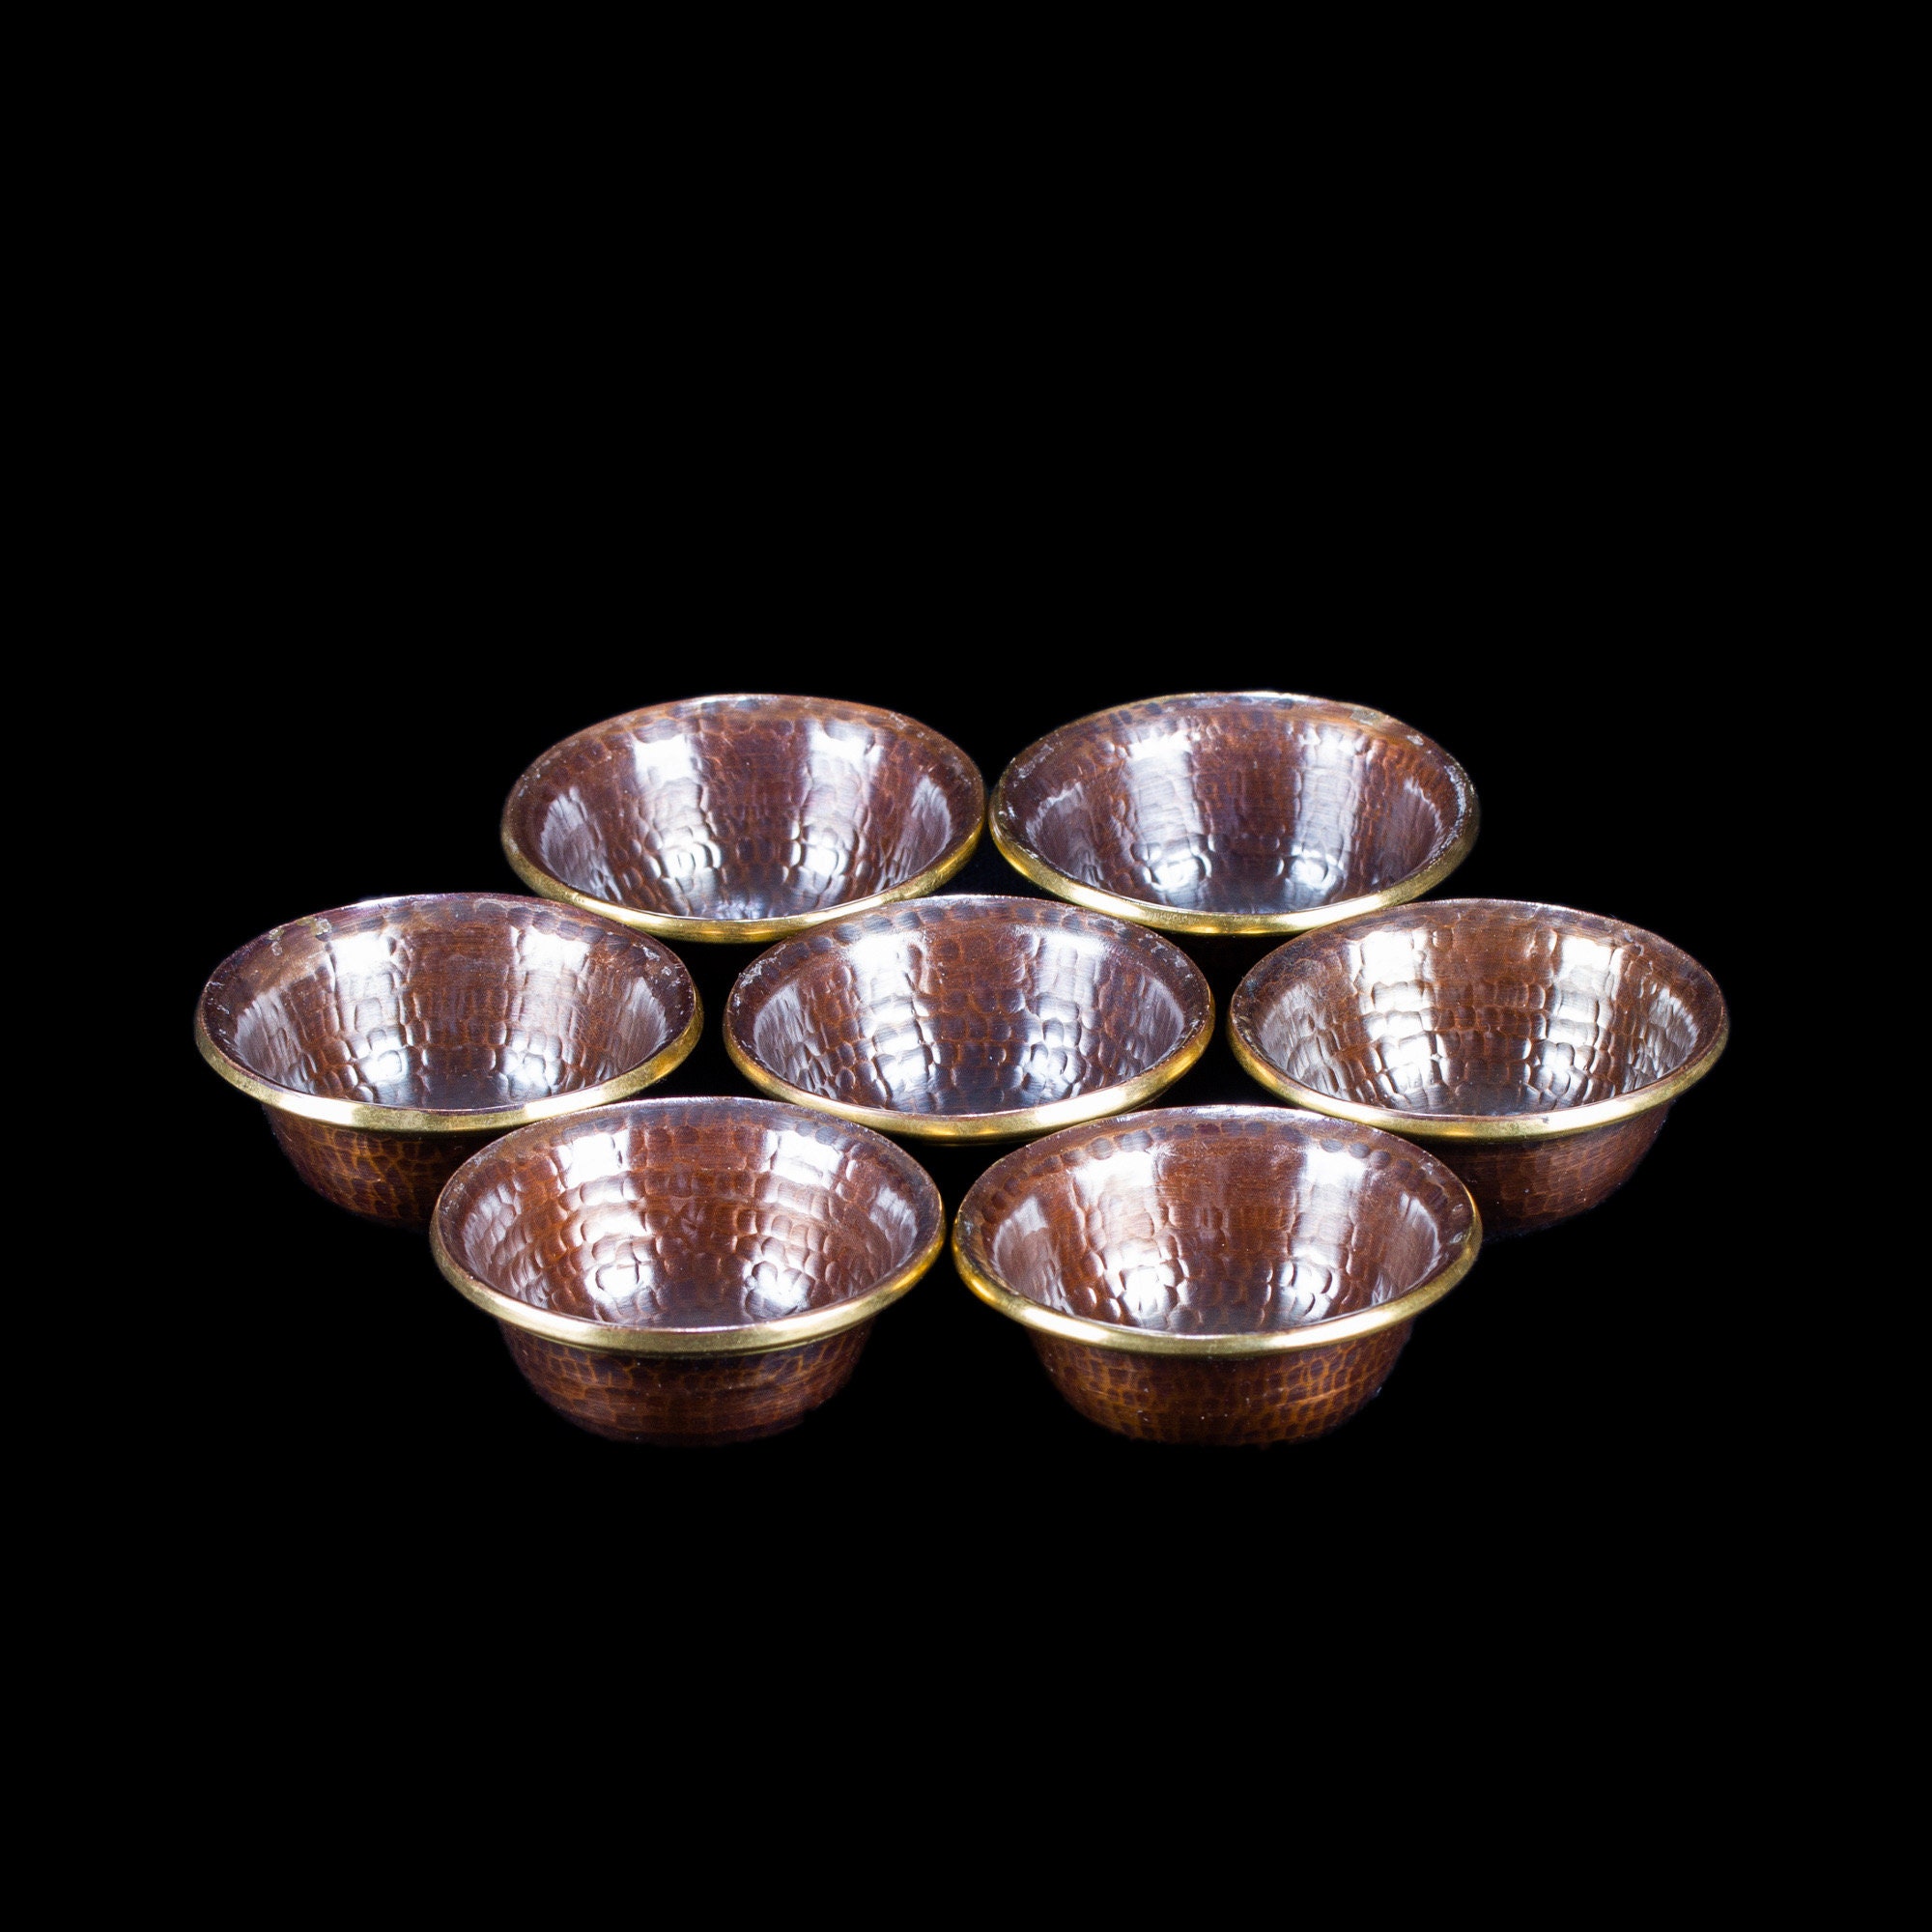 Details about   Tibetan Copper Offering Bowl Om Symbol Mandala Antuque US Seller Free Shipping 